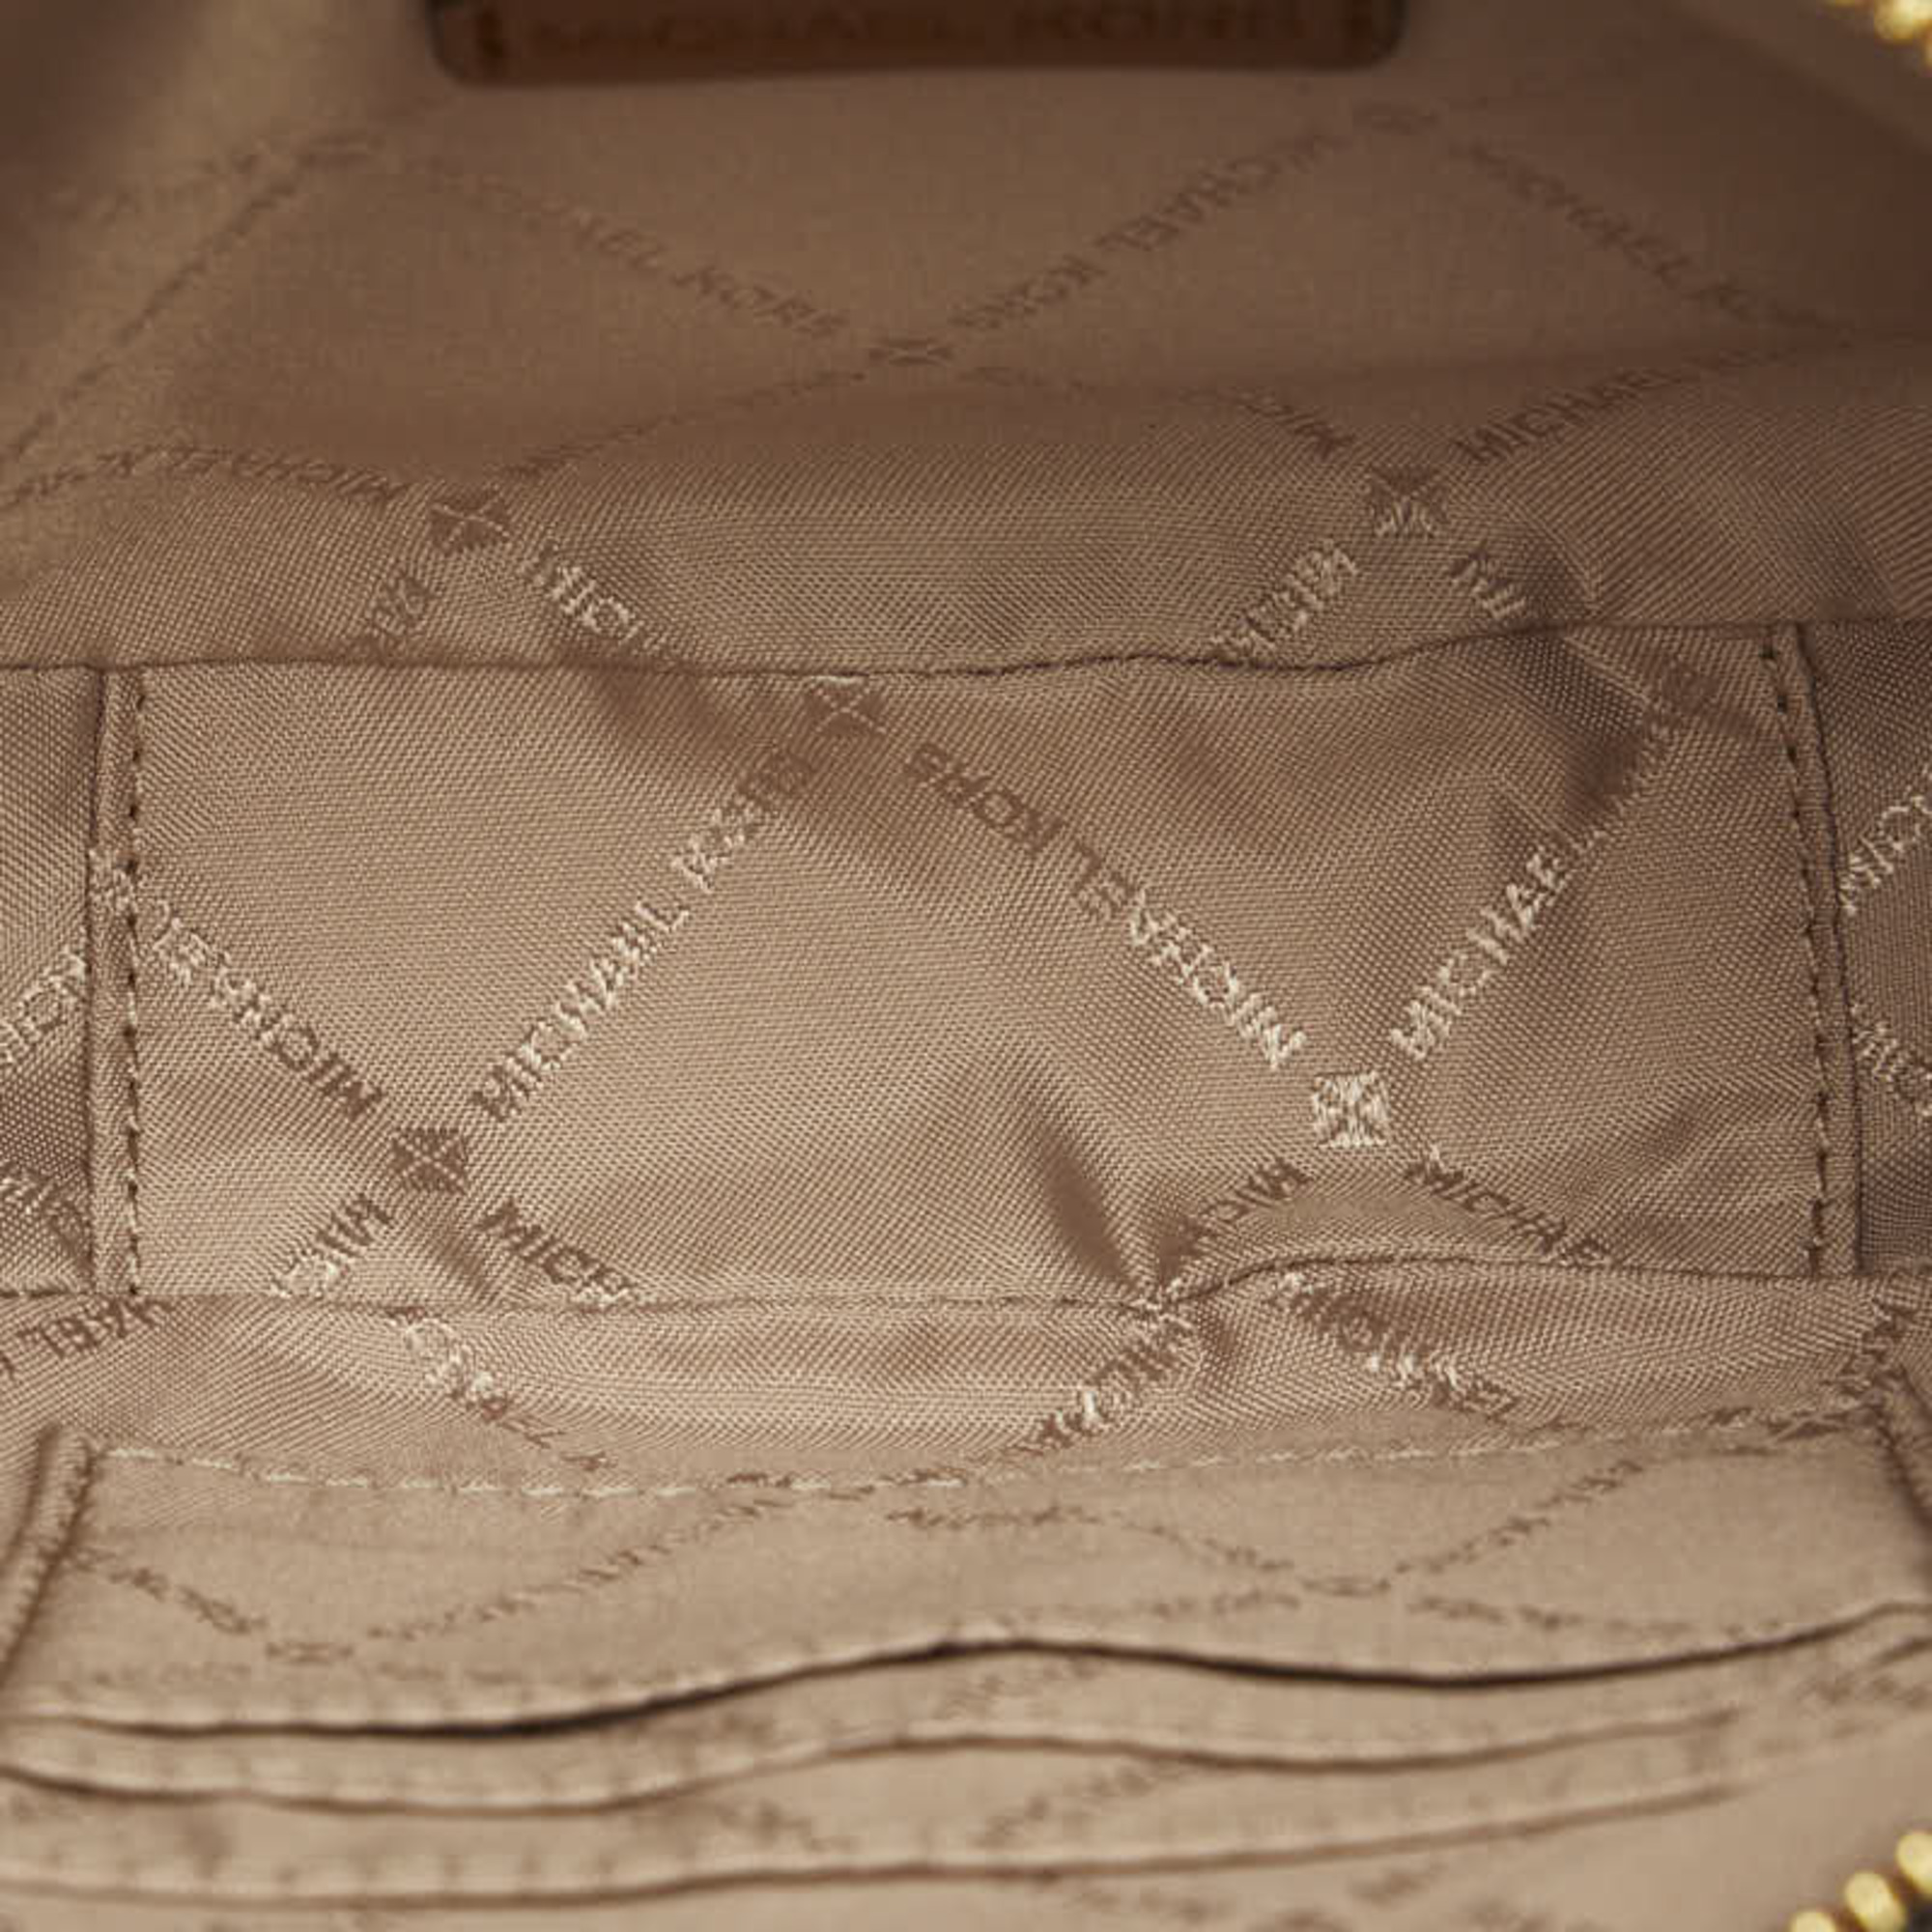 Michael Kors Dover Small Half Moon Shoulder Bag 35R3G4DC5L Brown Leather Women's